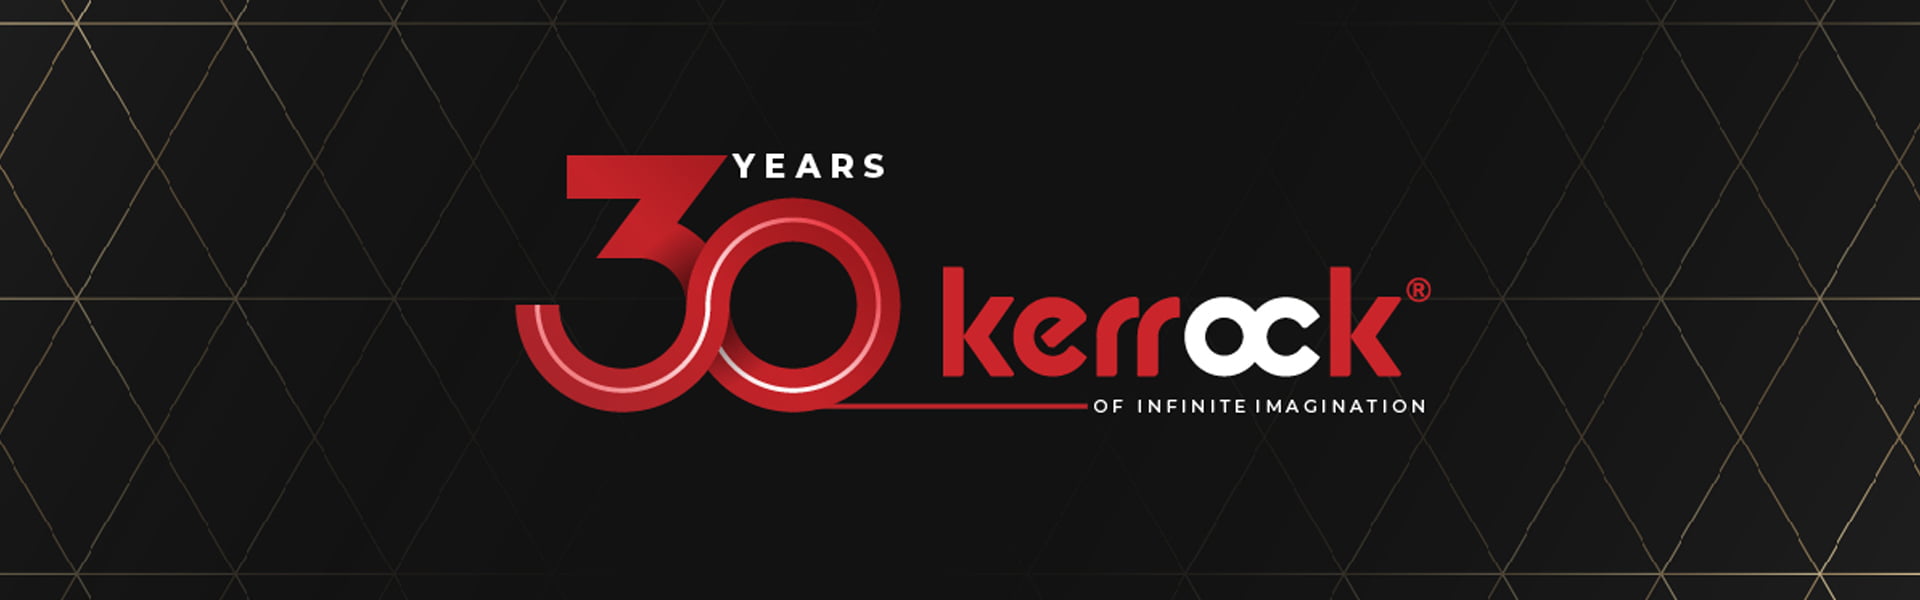 30 YEARS OF KERROCK